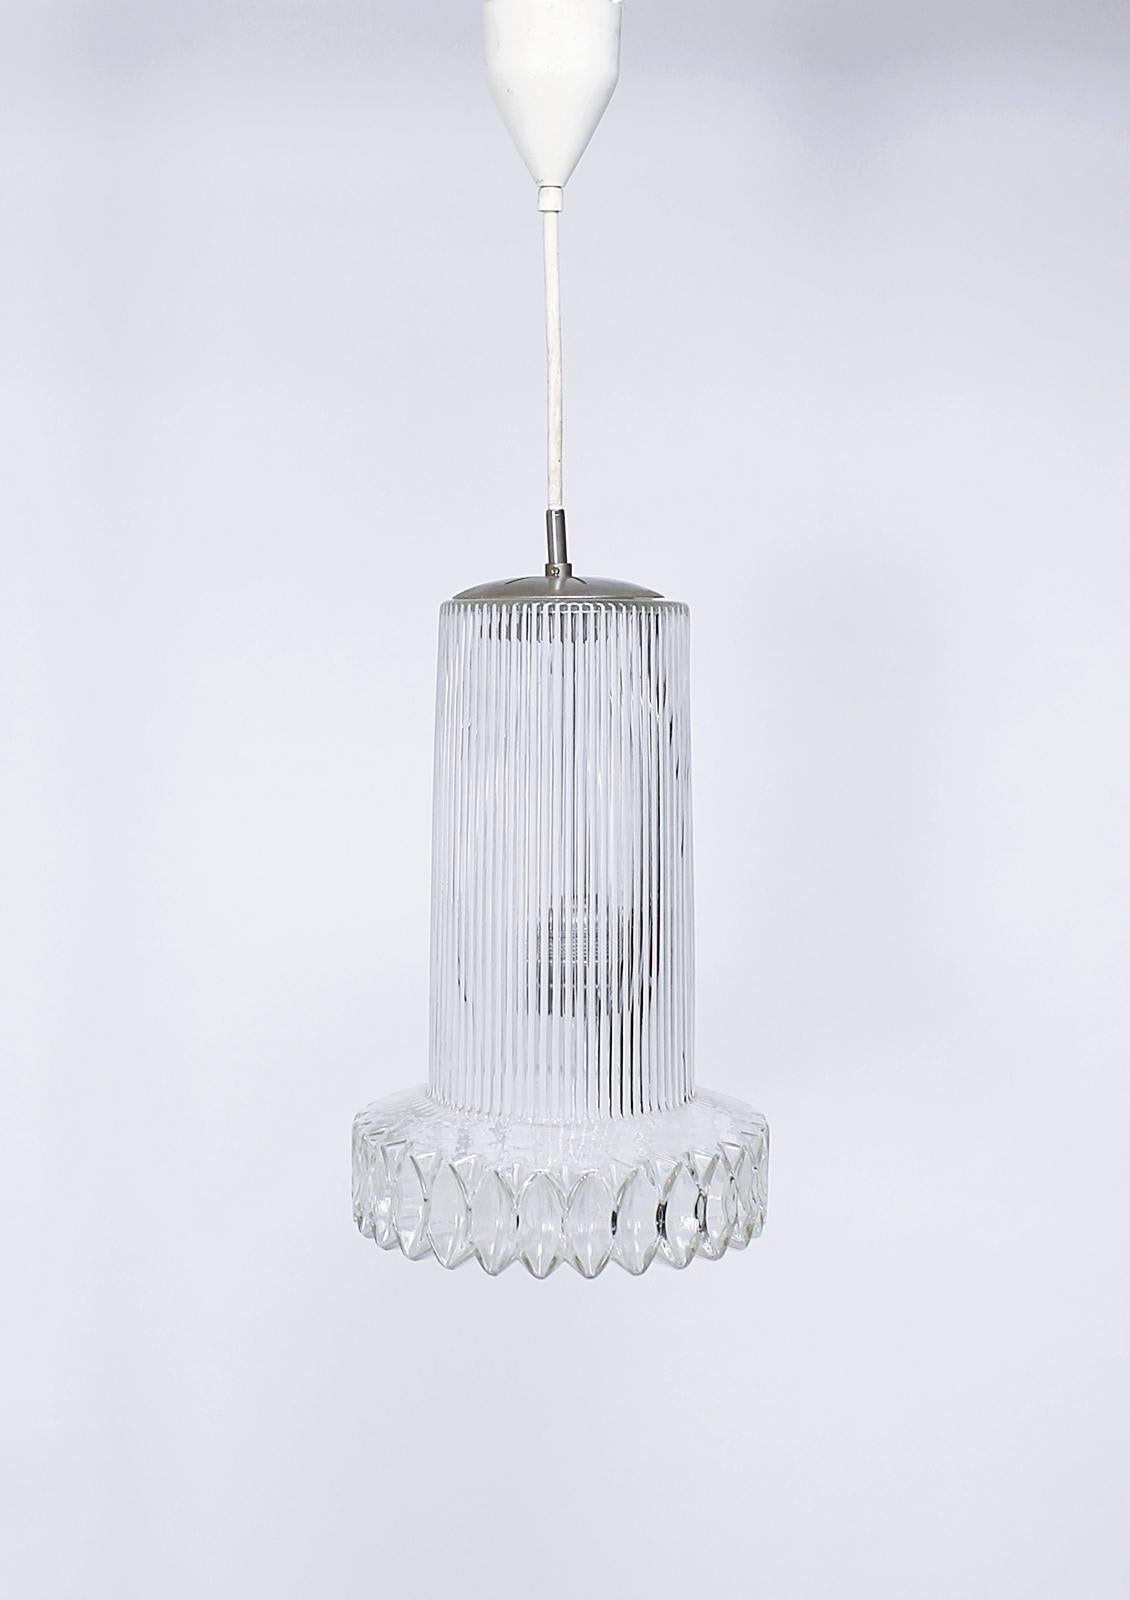 textured glass pendant lights